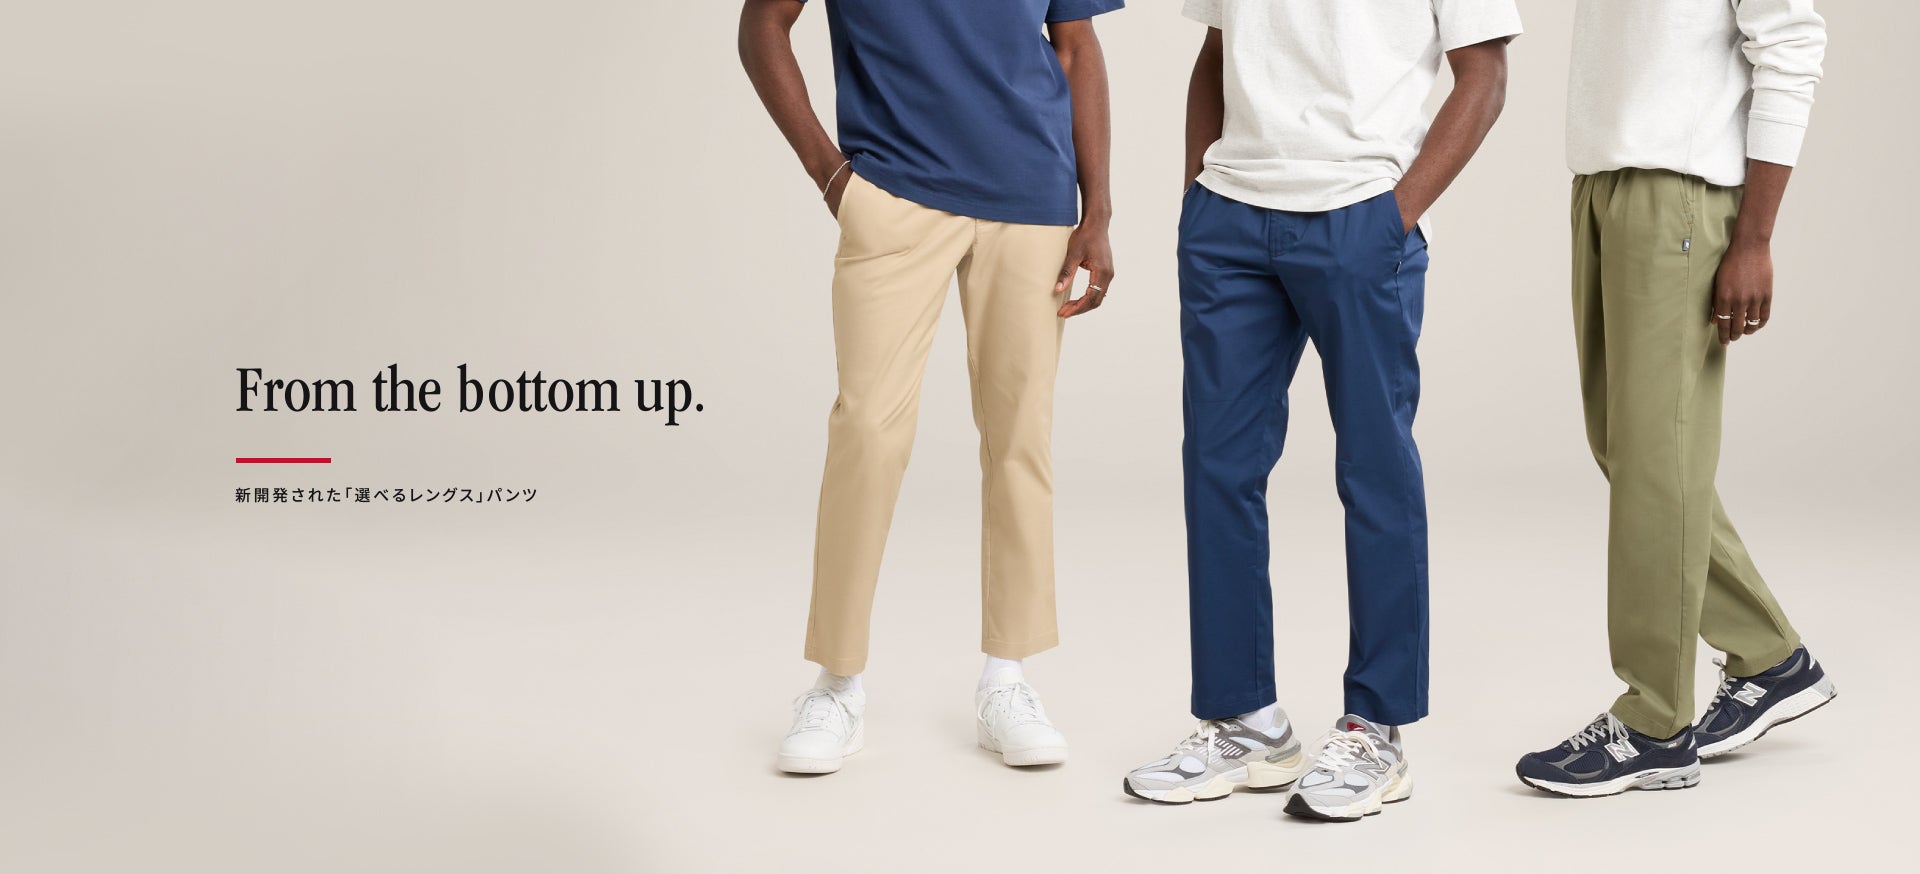 New Balance Pants Collection | 新開発された「選べるレングス」パンツ